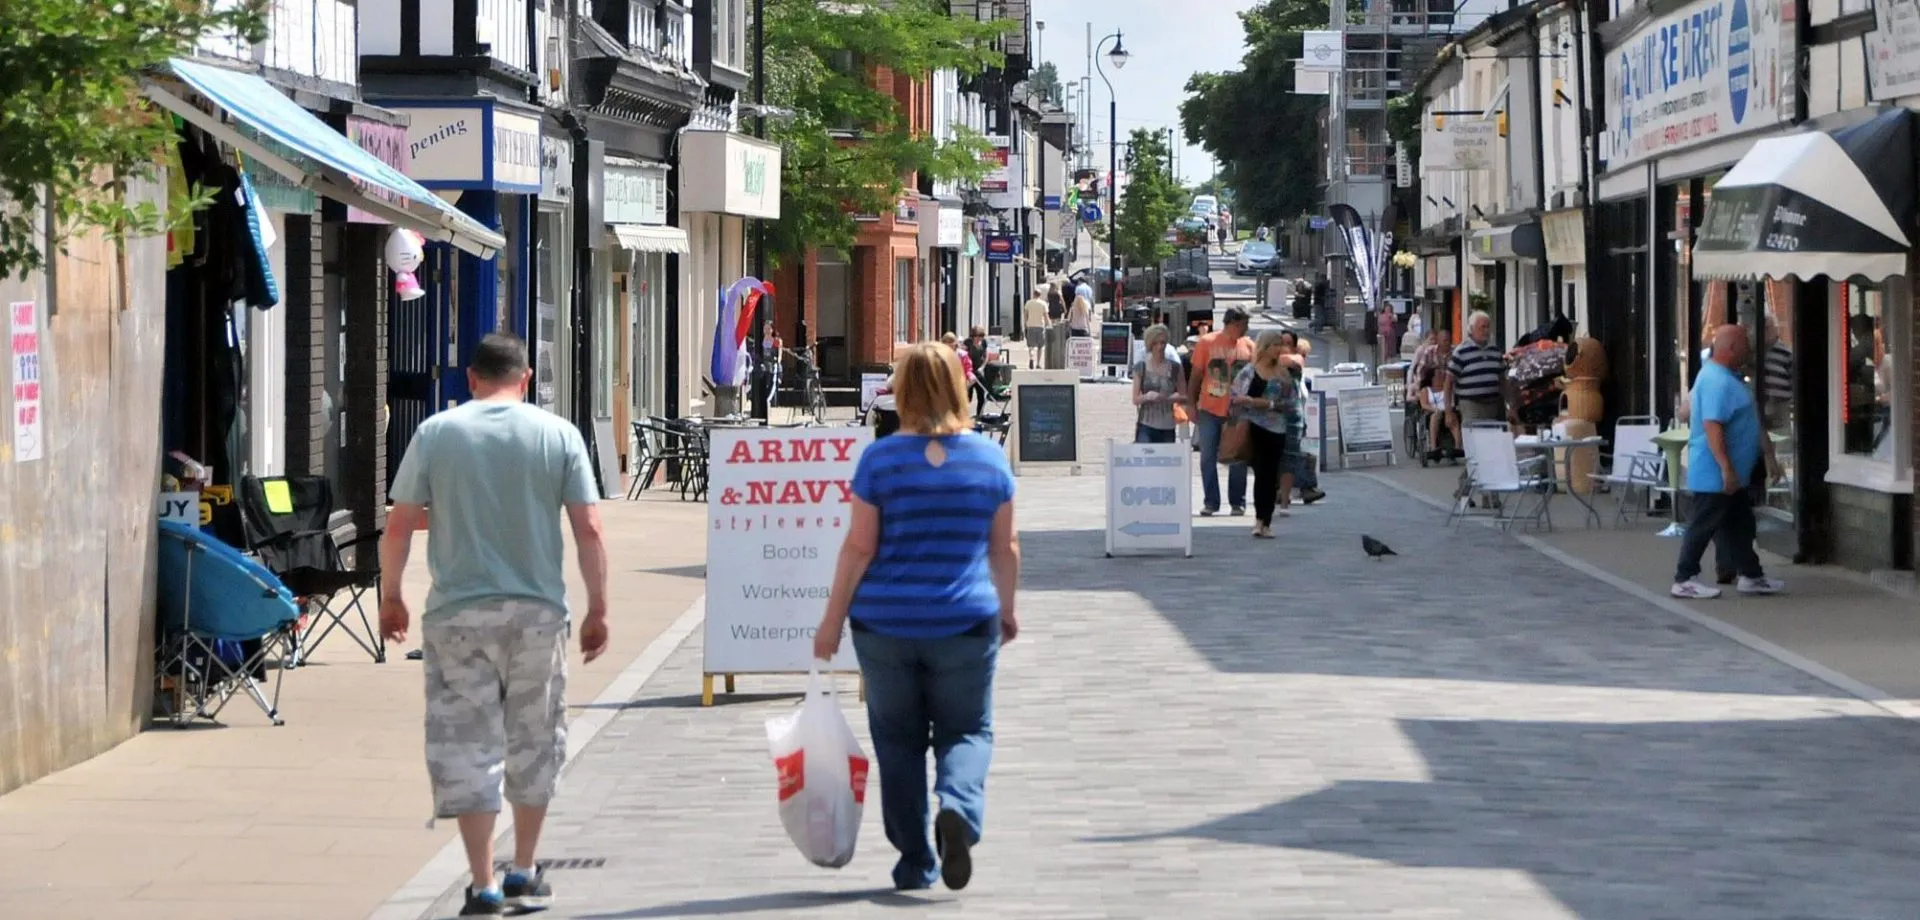 photo of people walking down highstreet in england